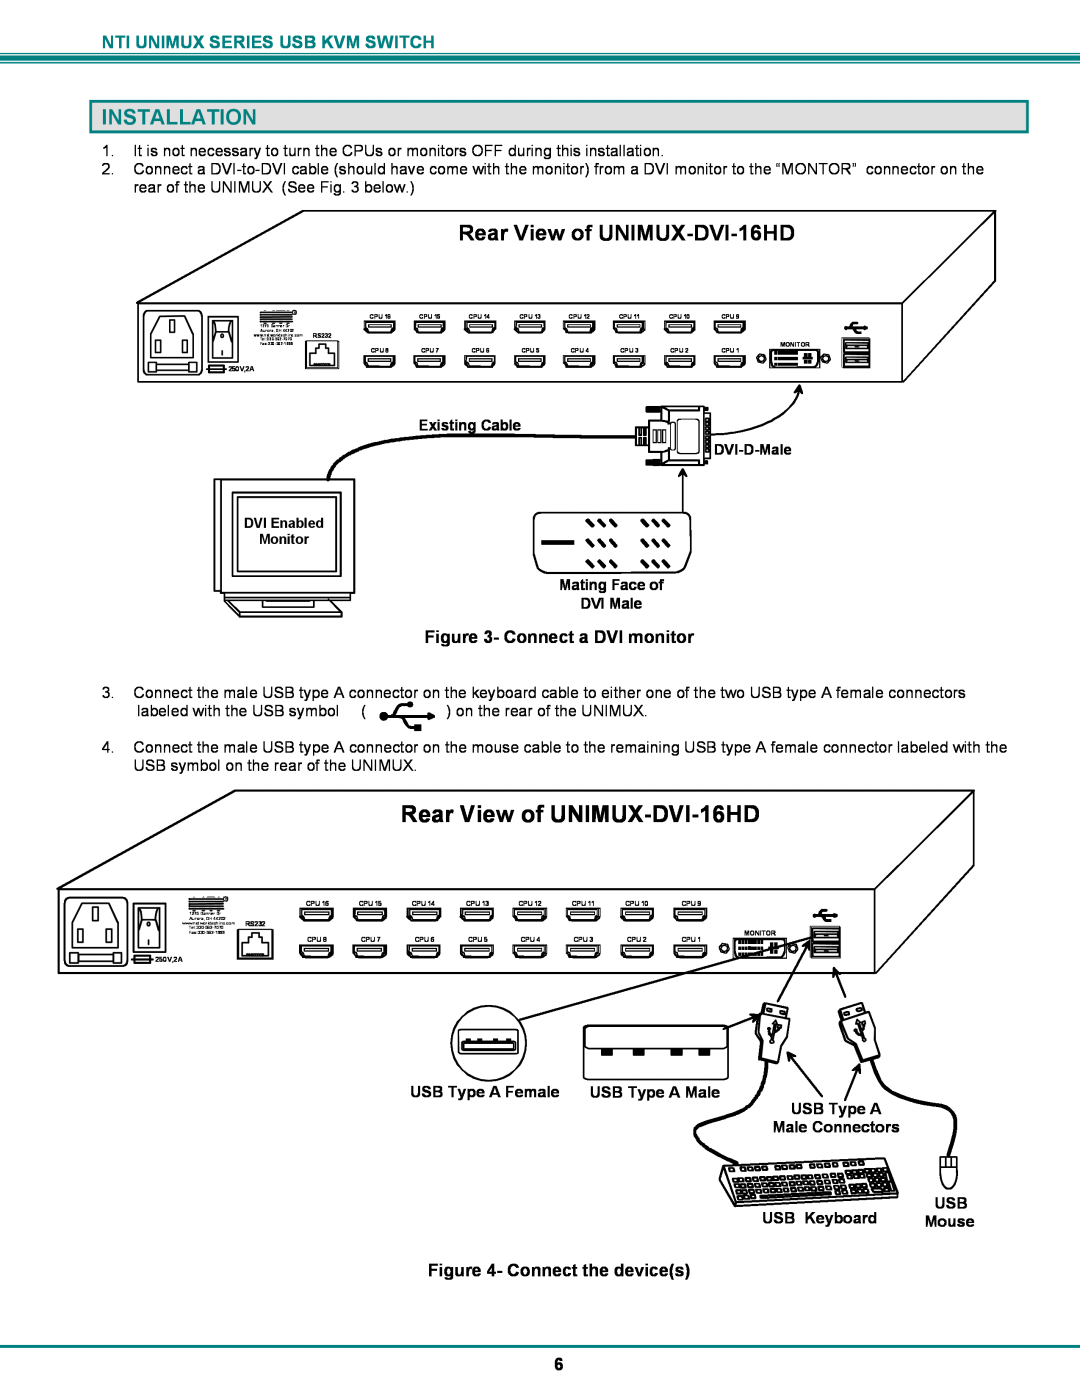 Network Technologies UNIMUX-DVI-xHD Installation, Rear View of UNIMUX-DVI-16HD, Connect a DVI monitor, Connect the devices 